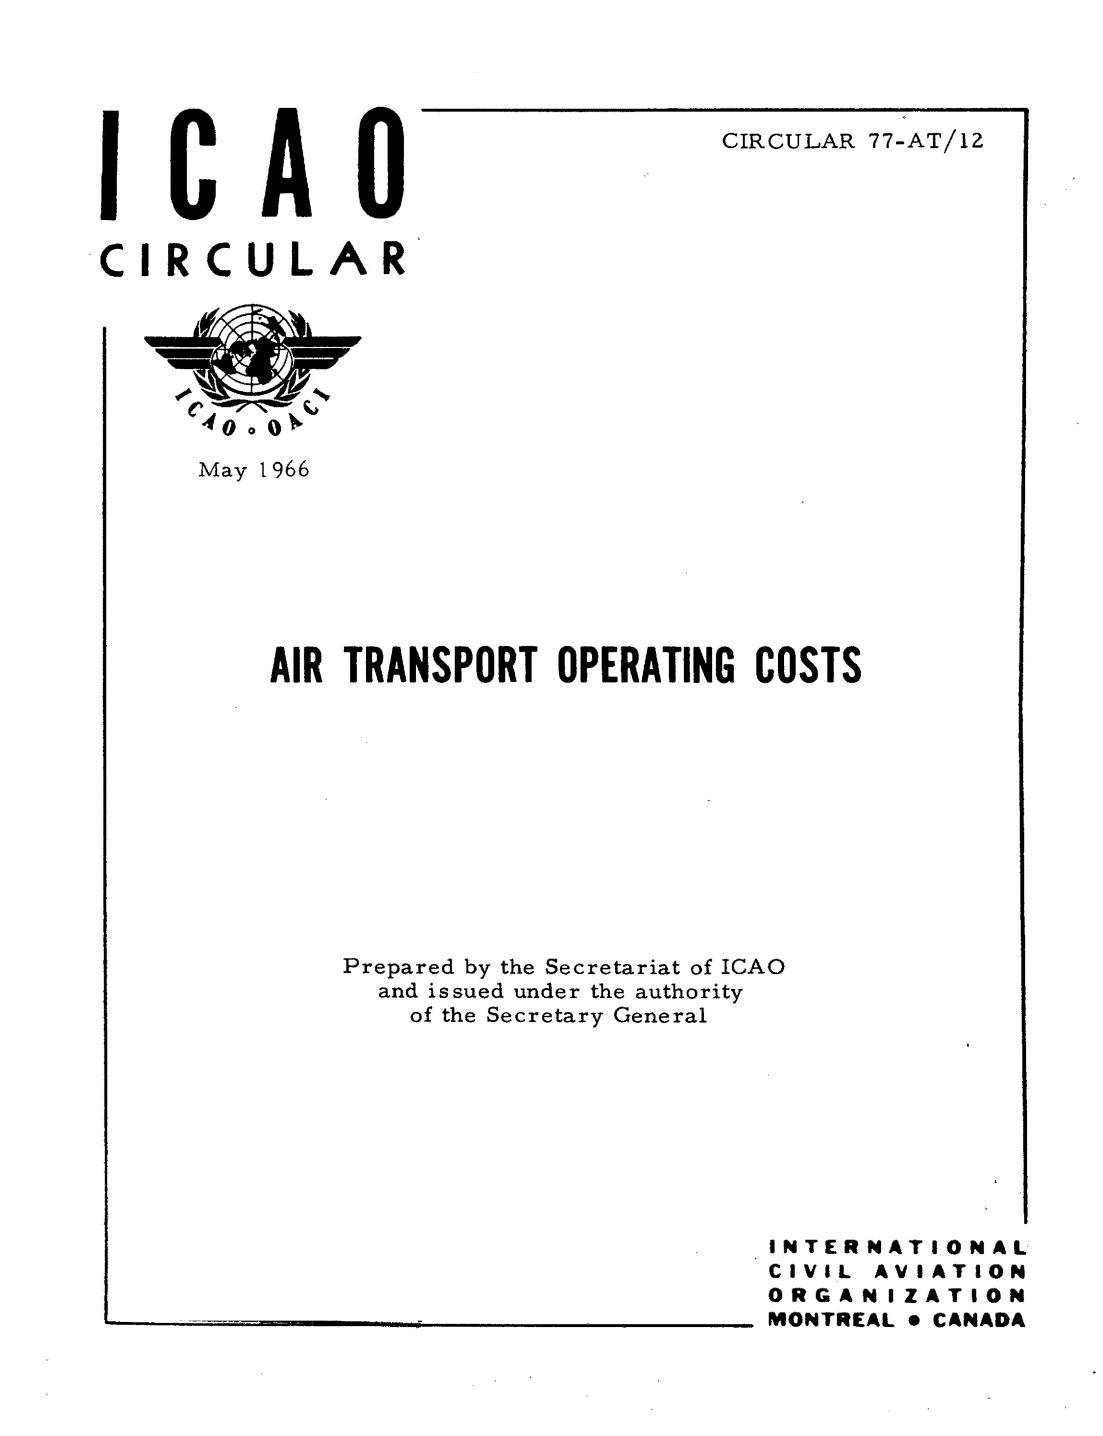 Cir 77 AIR TRANSPORT OPERATING COSTS